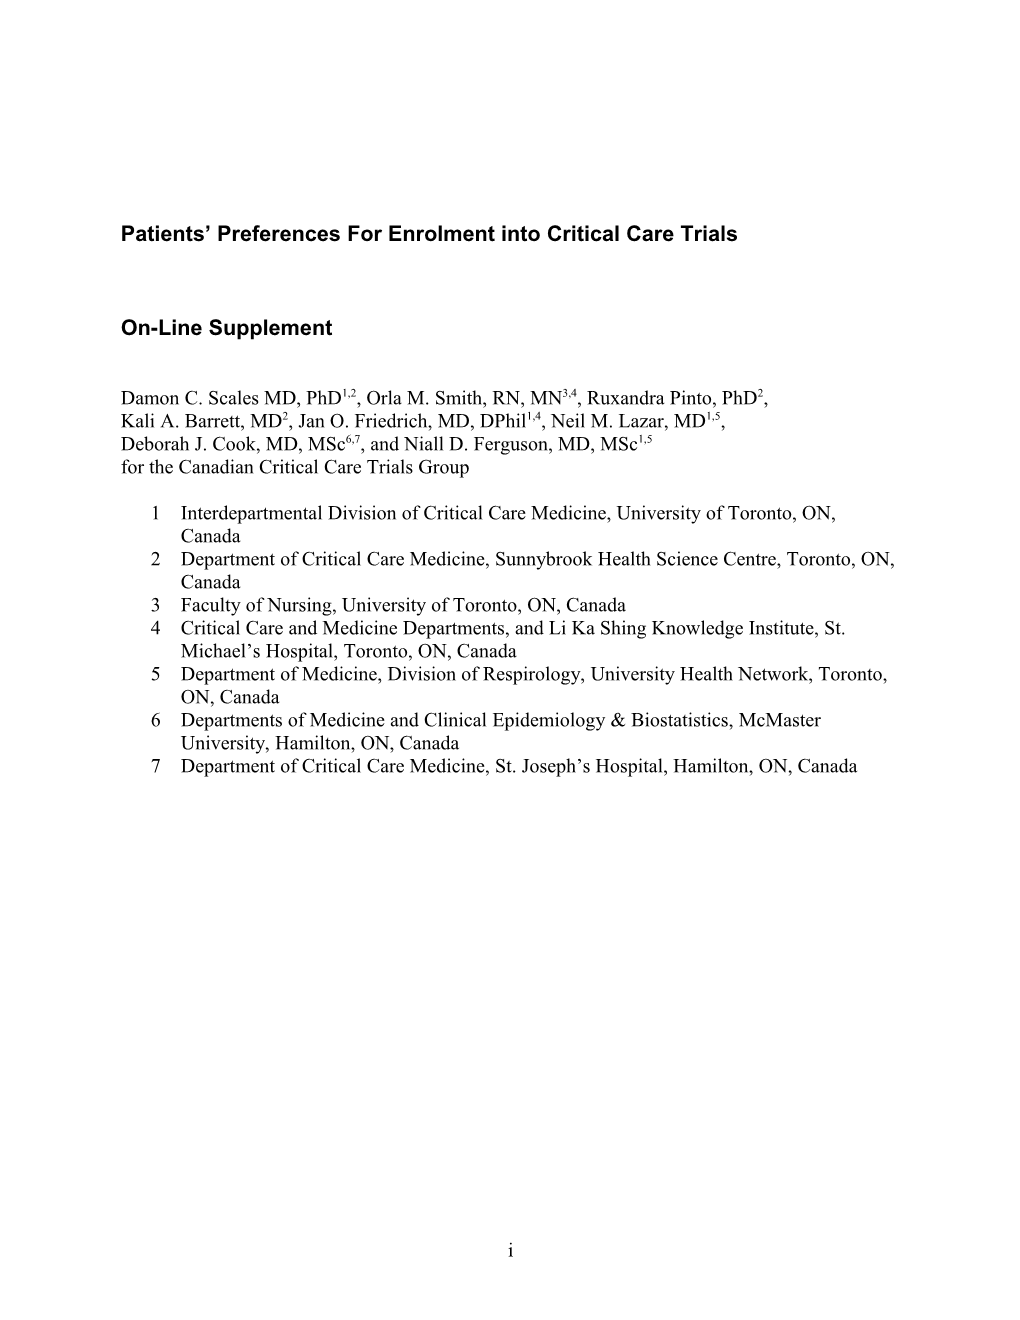 Patients Preferences for Enrolment Into Critical Care Trials